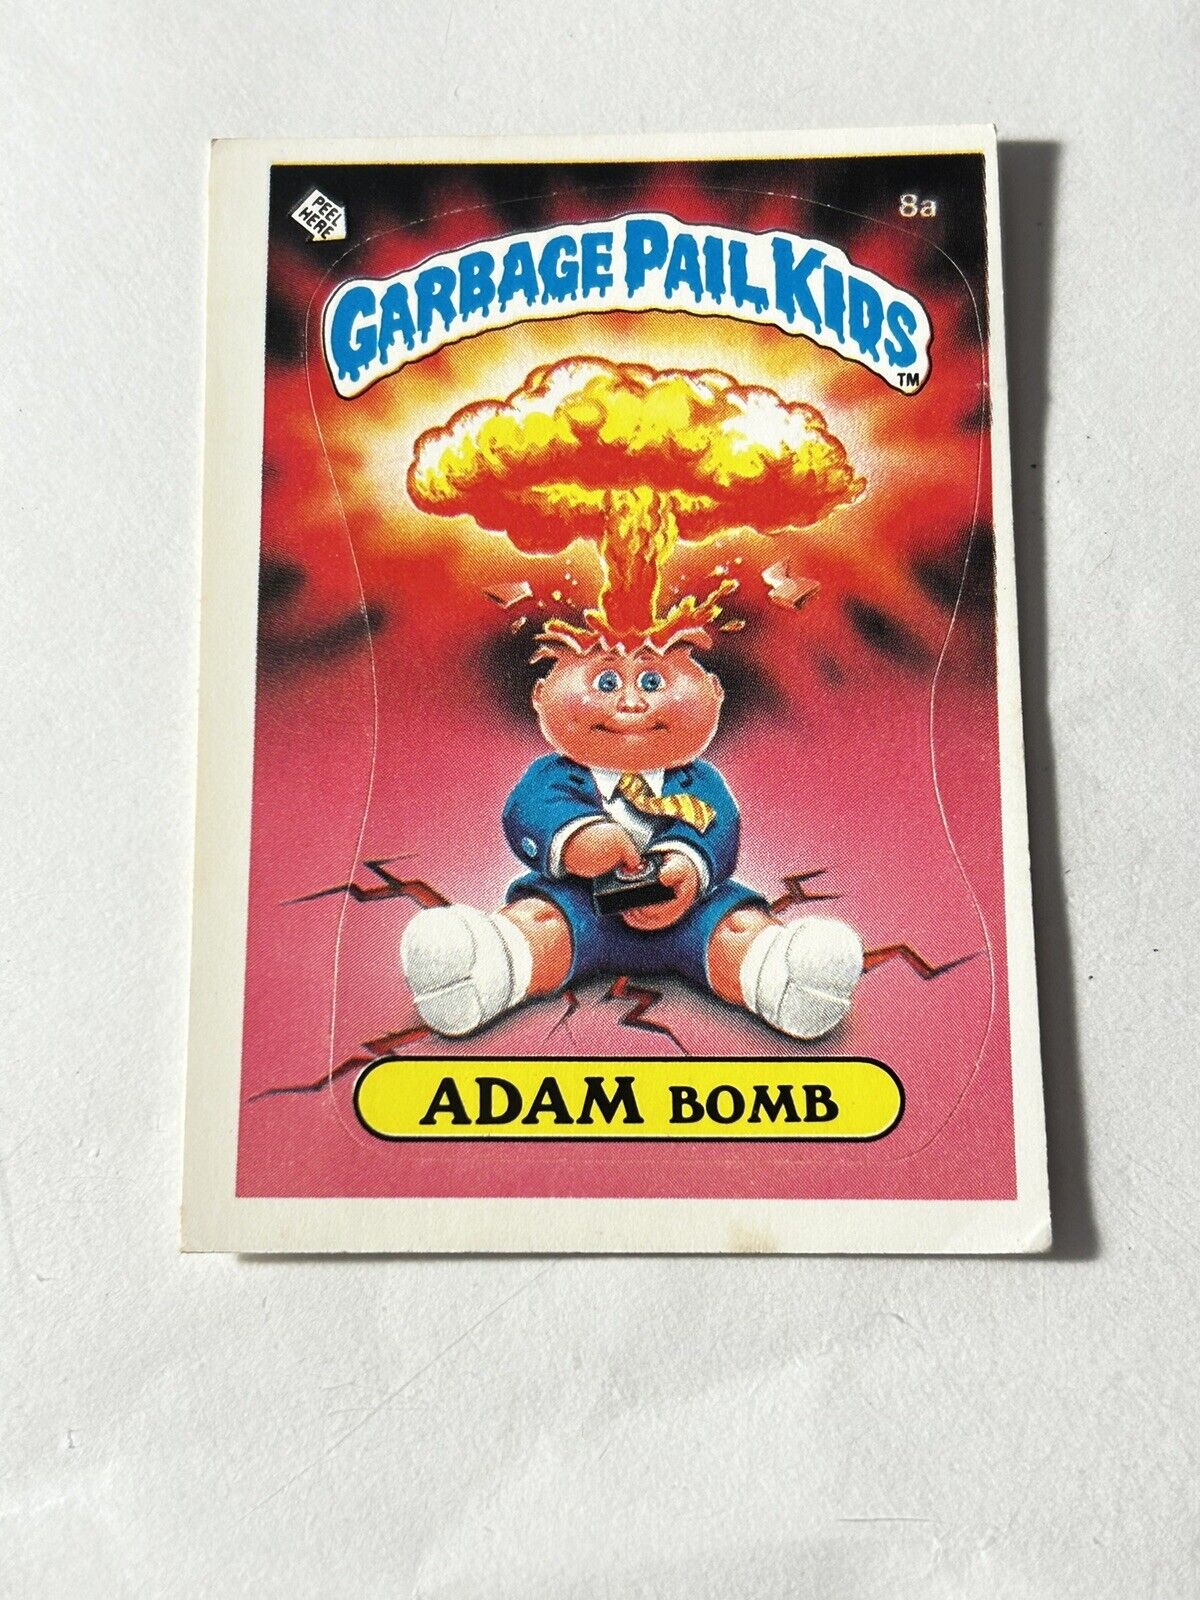 1985 Topps Garbage Pail Kids ADAM BOMB 8a Series 1 Checklist Good Shape